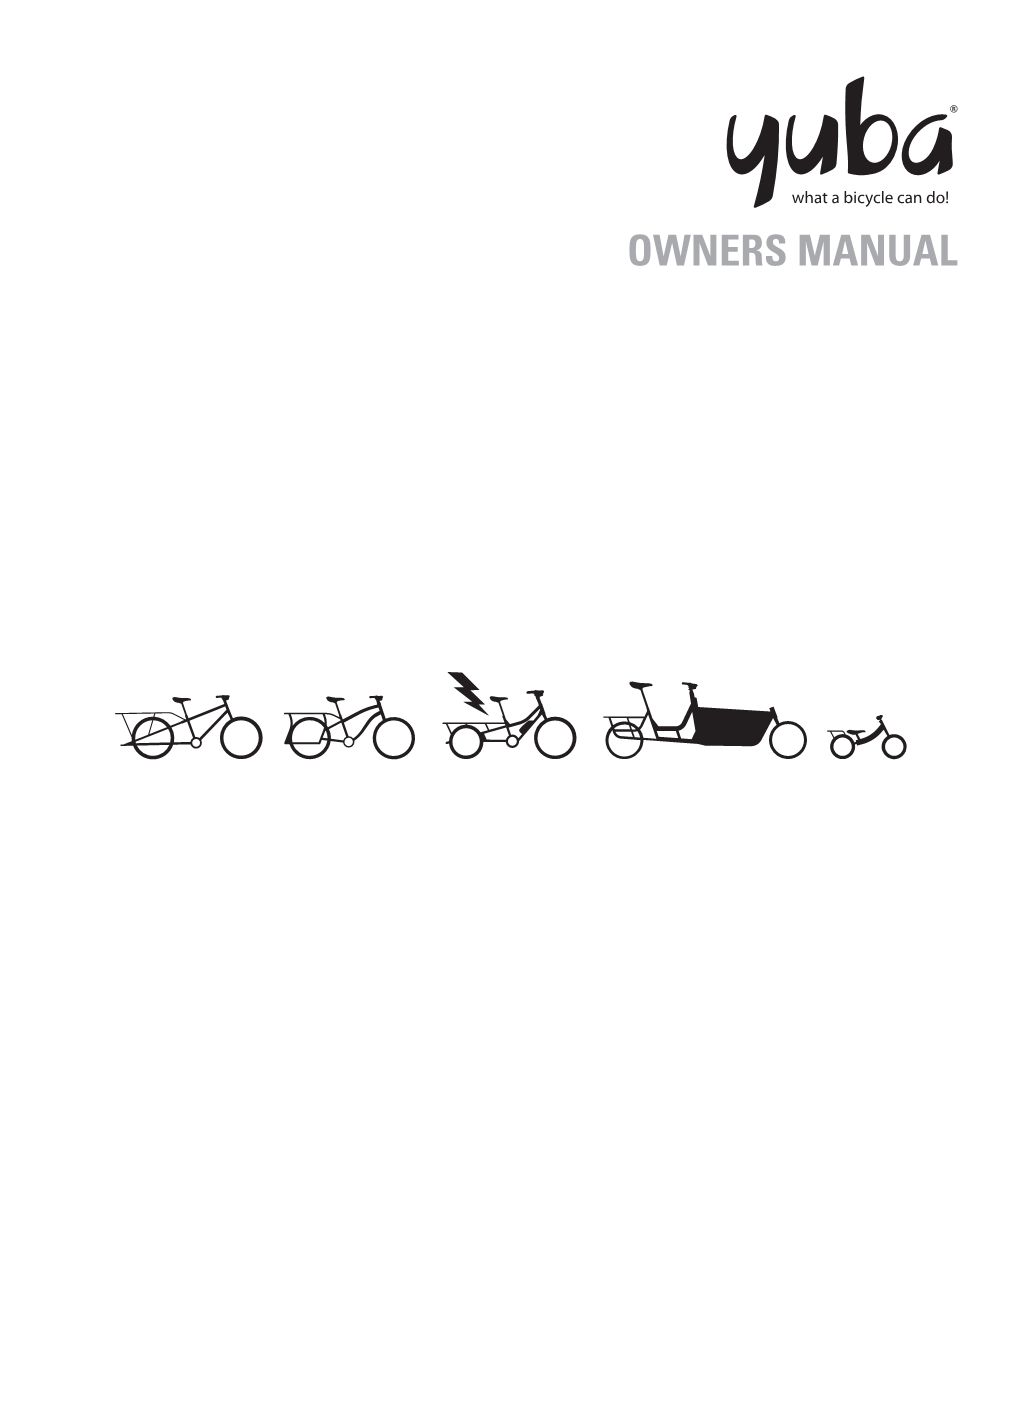 Yuba Bicycle Owner's Manual